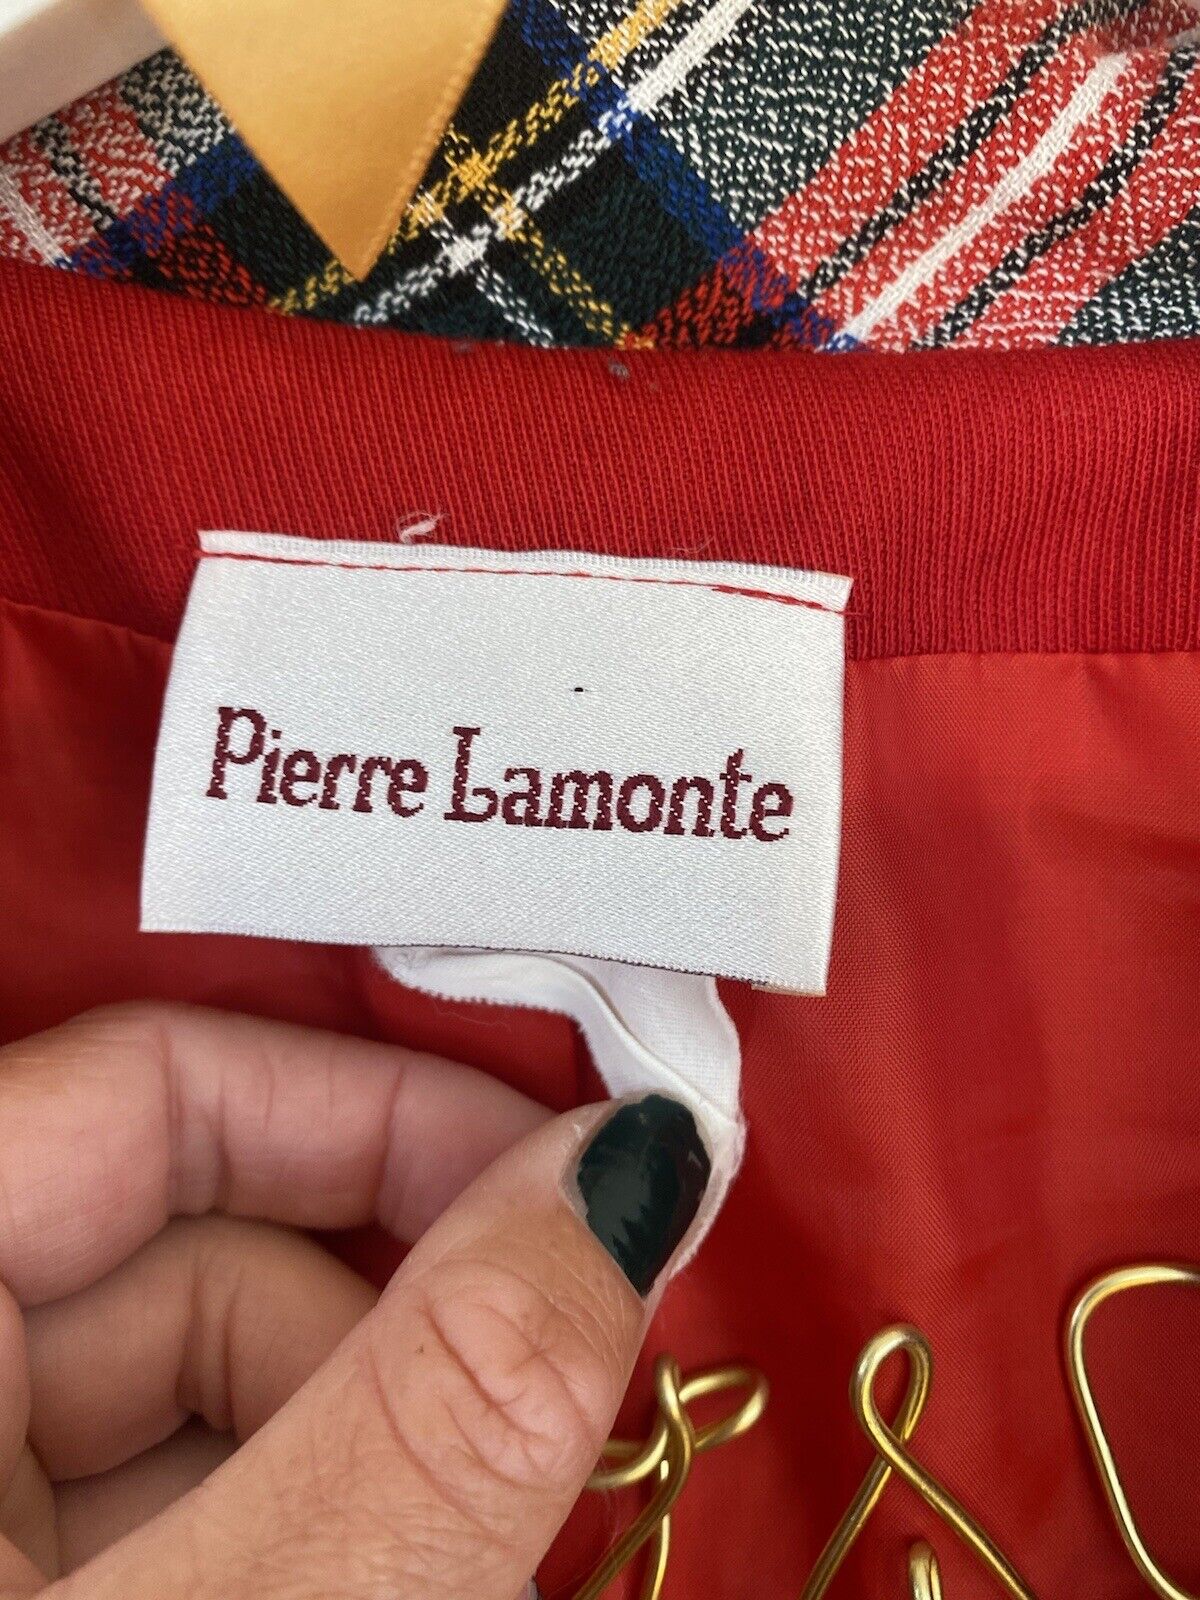 Vintage Red Blazer - Pierre Lamonte - Women’s Large